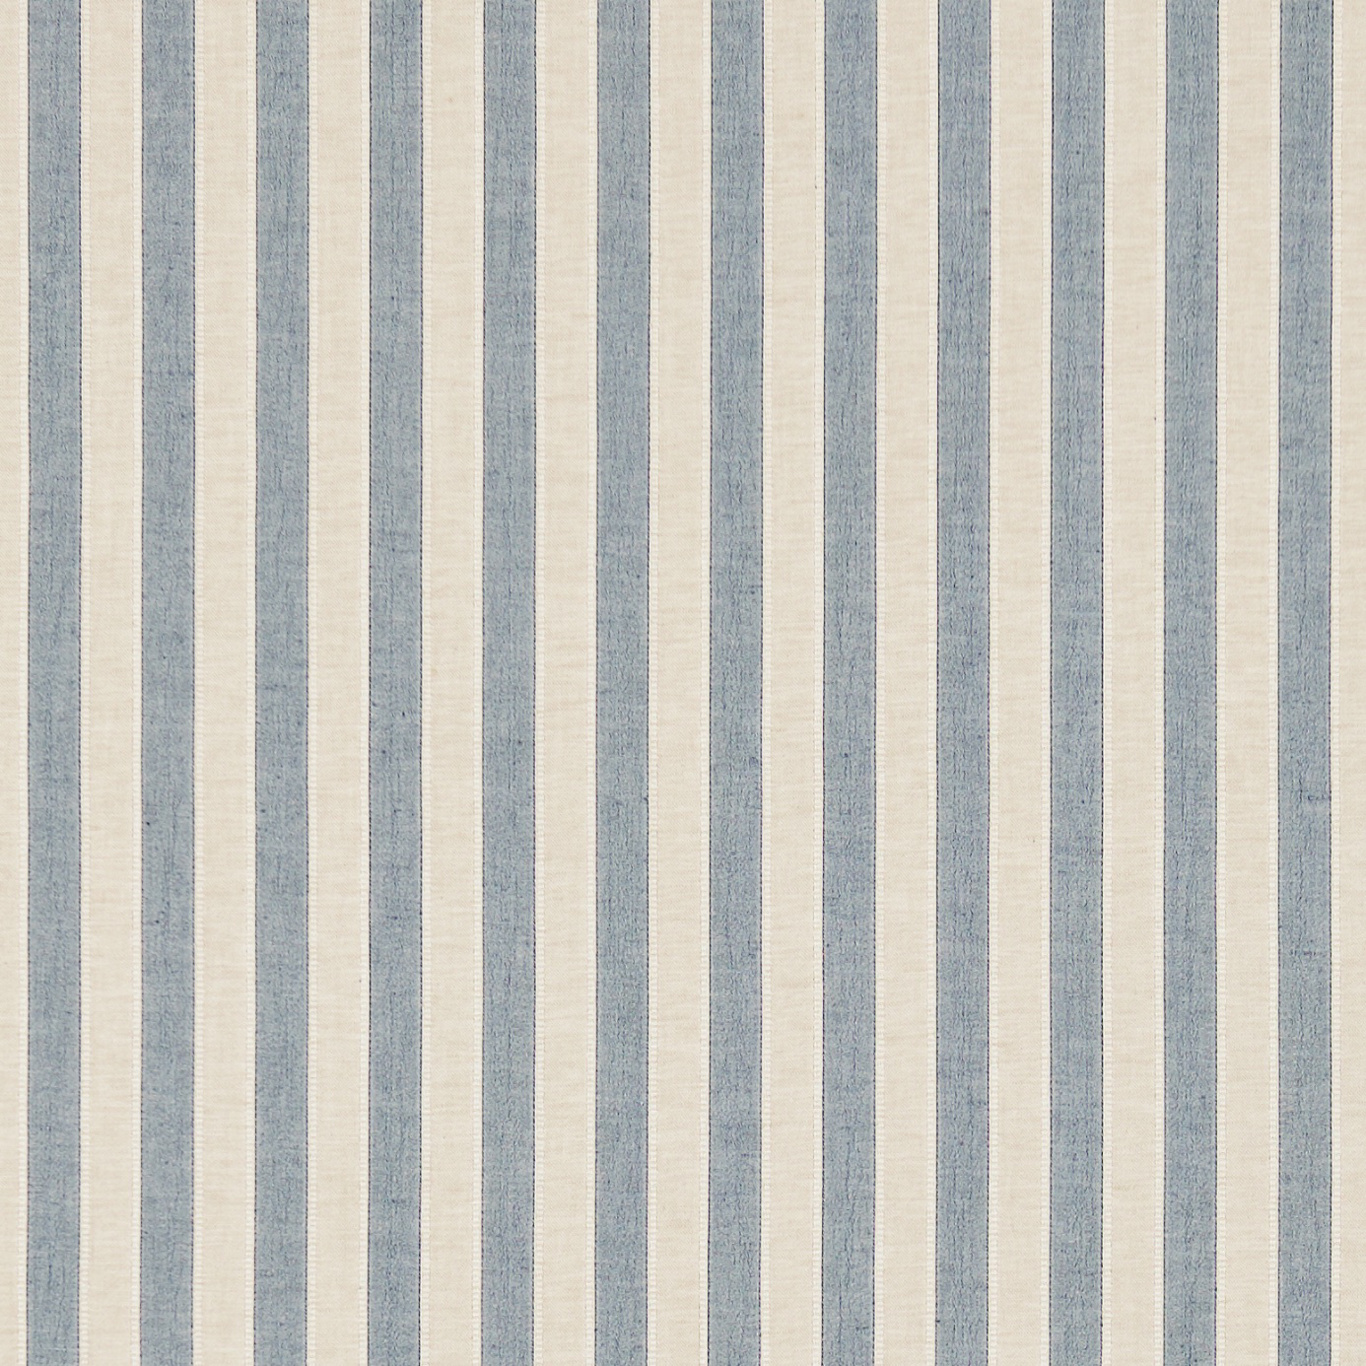 Sorilla Stripe Indigo Linen Fabric by SAN